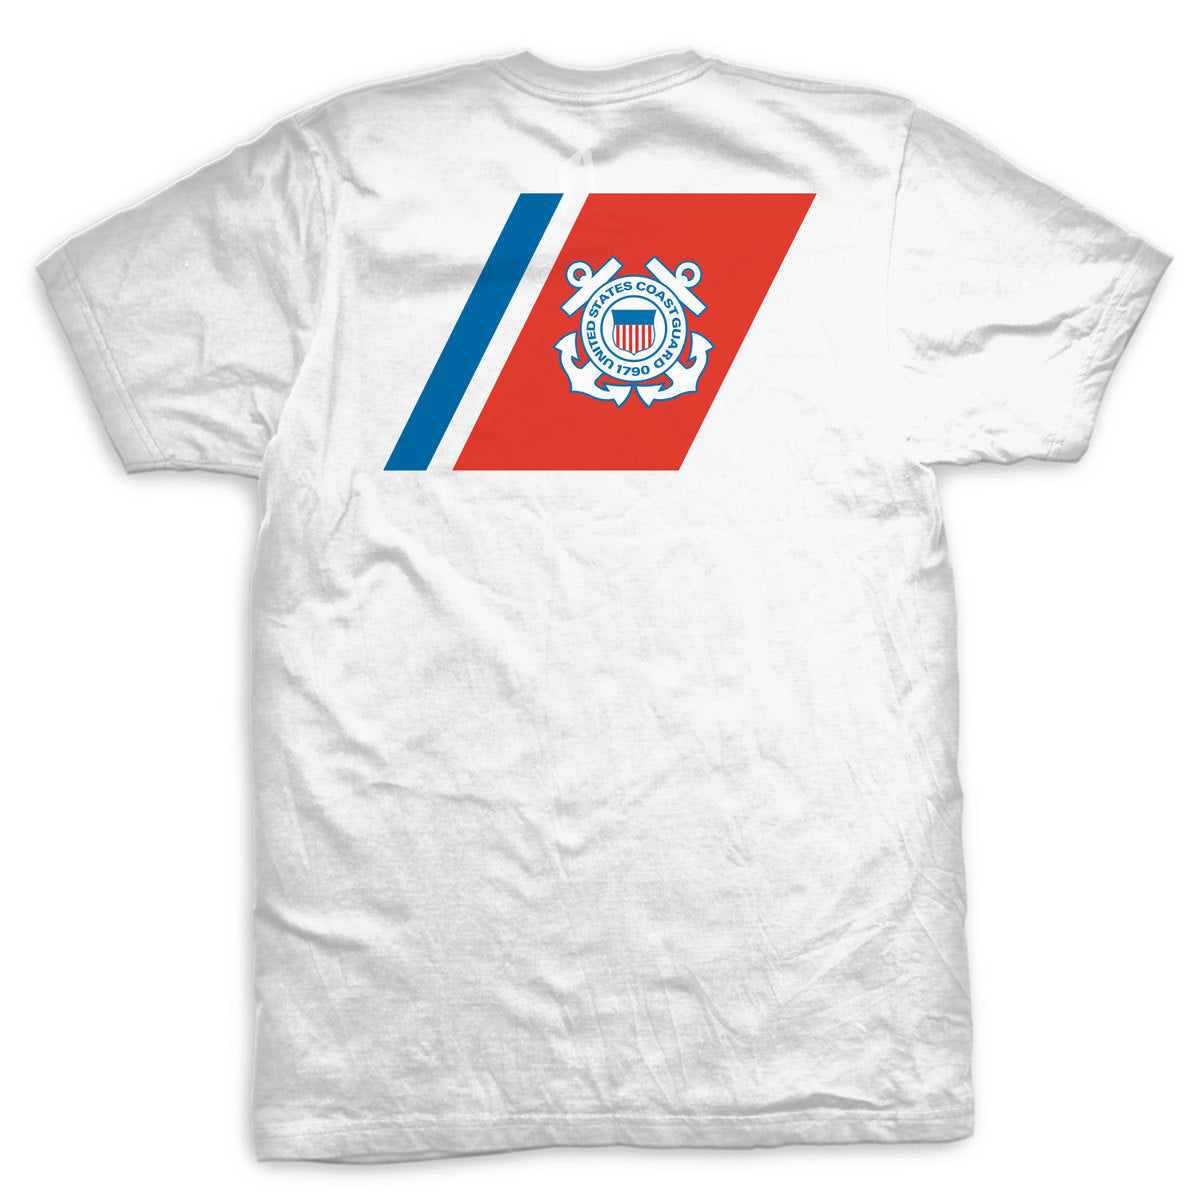 Racing Stripe Coast Guard T-shirt